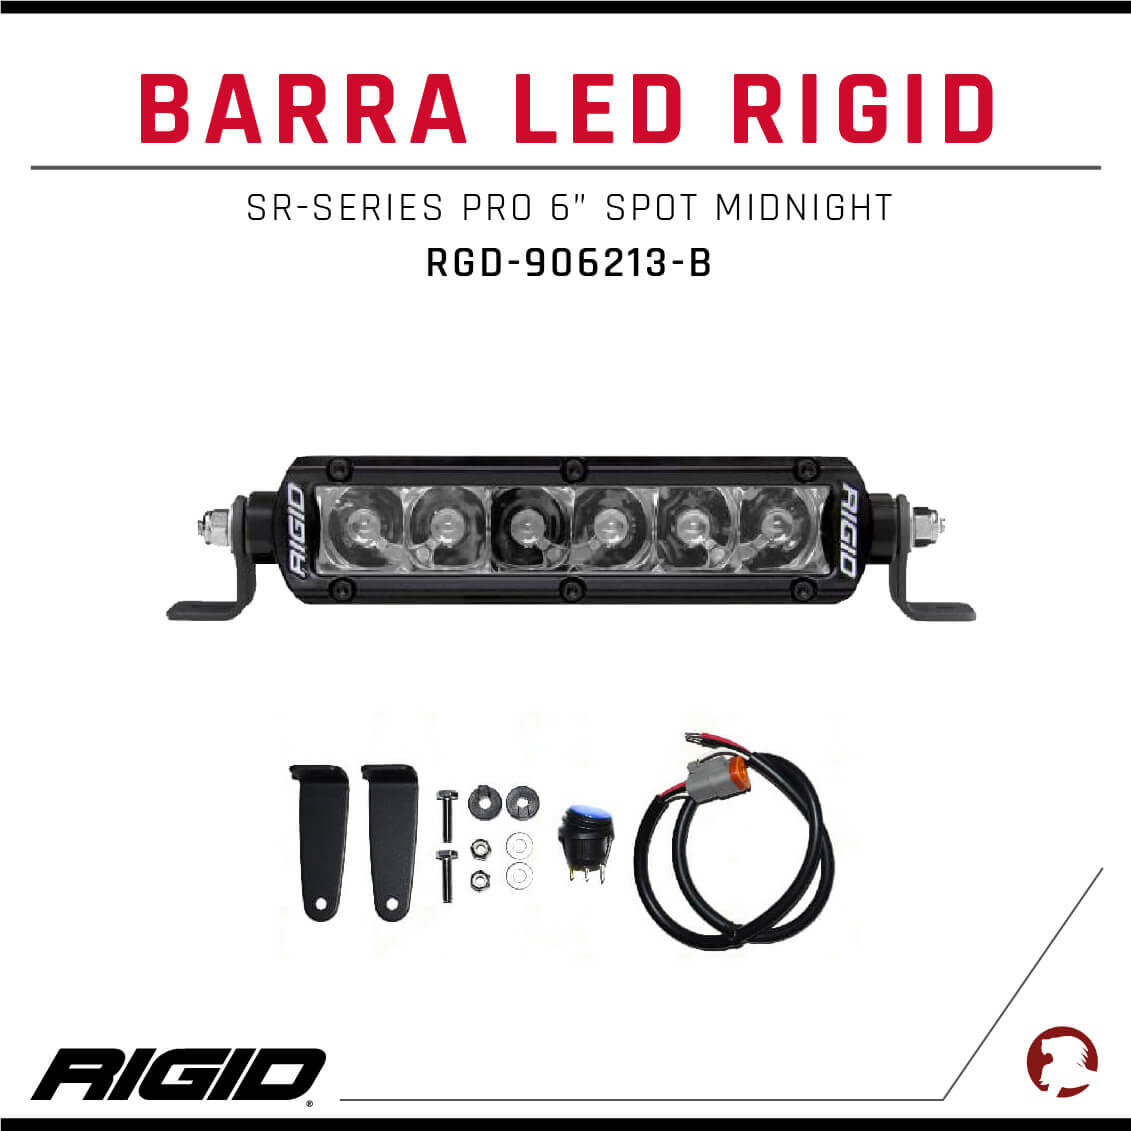 BARRA A LED SPOT 6 RIGID - Performance 4x4